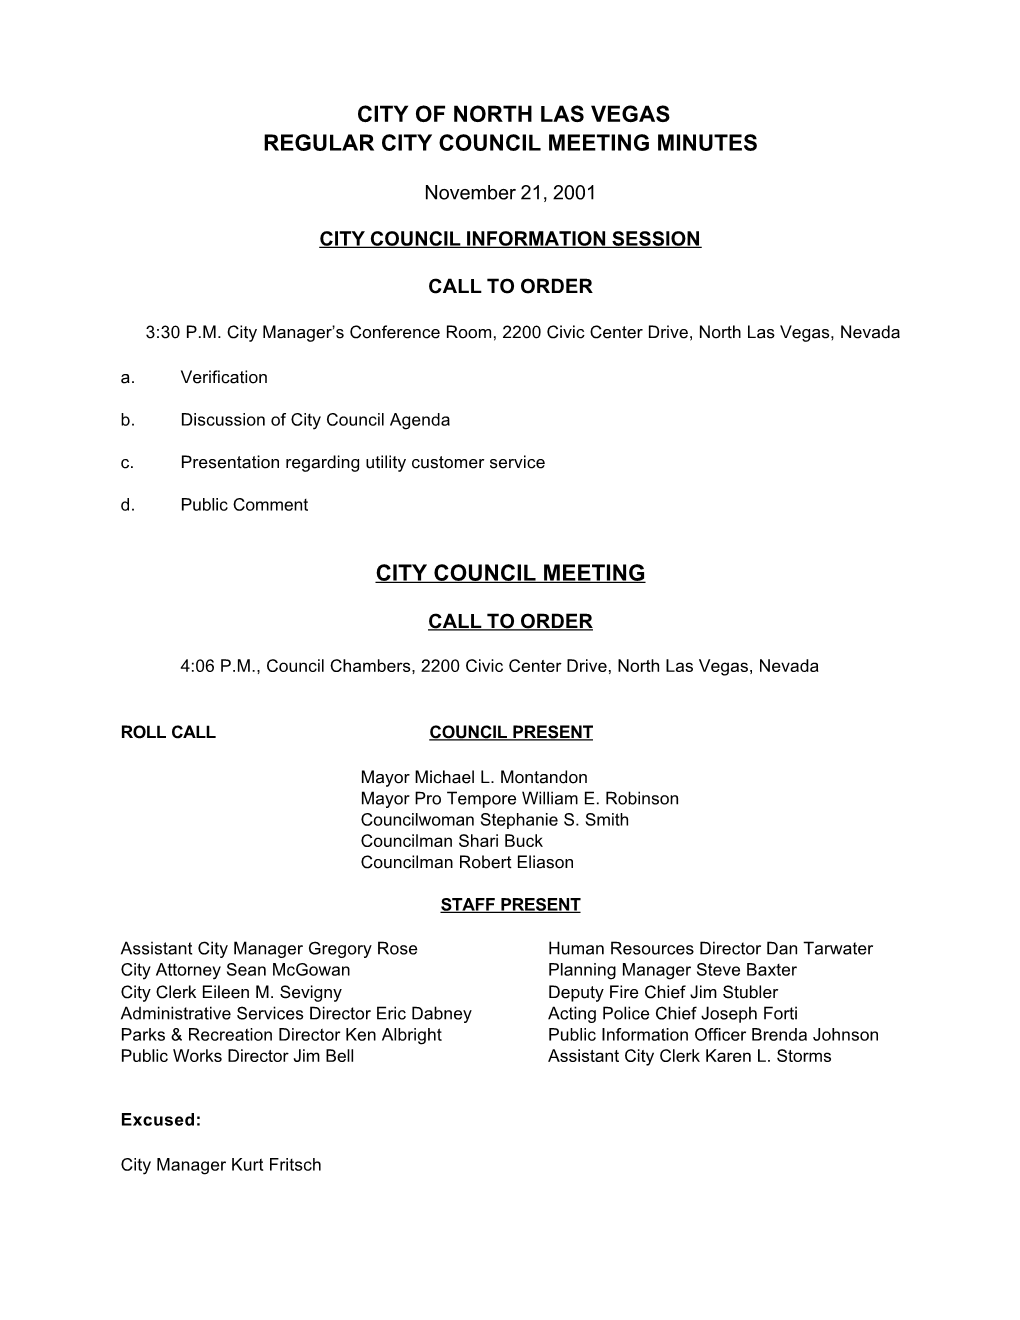 City of North Las Vegas Regular City Council Meeting Minutes